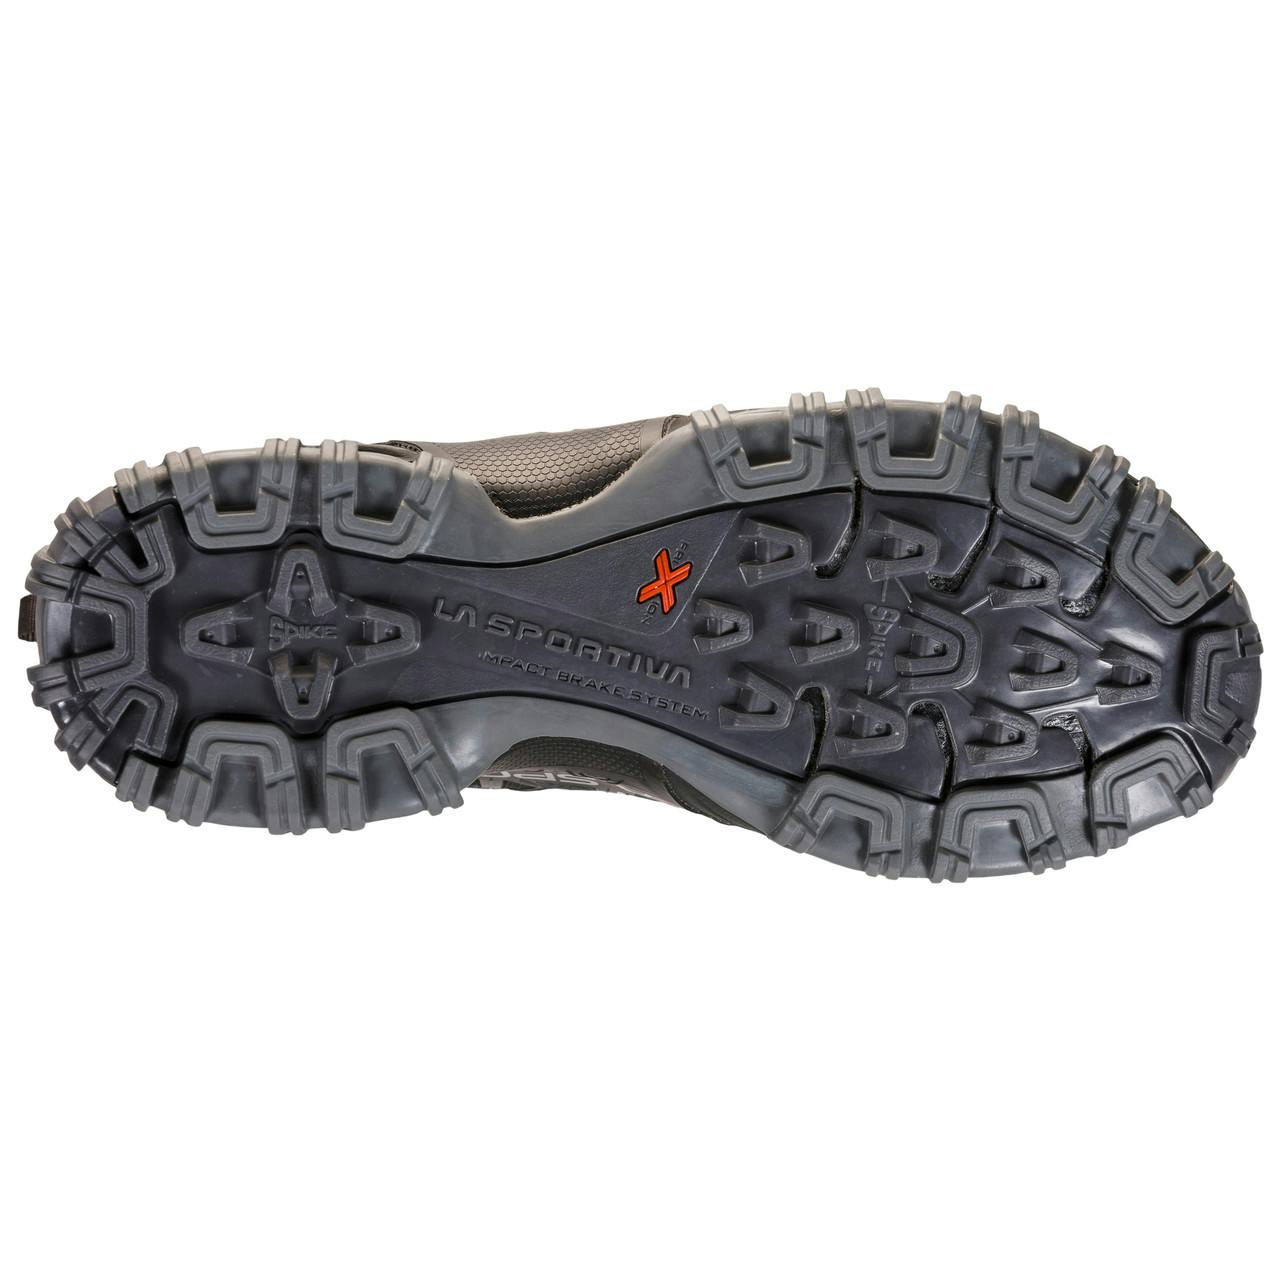 Bushido II Trail Running Shoes Black/Carbon